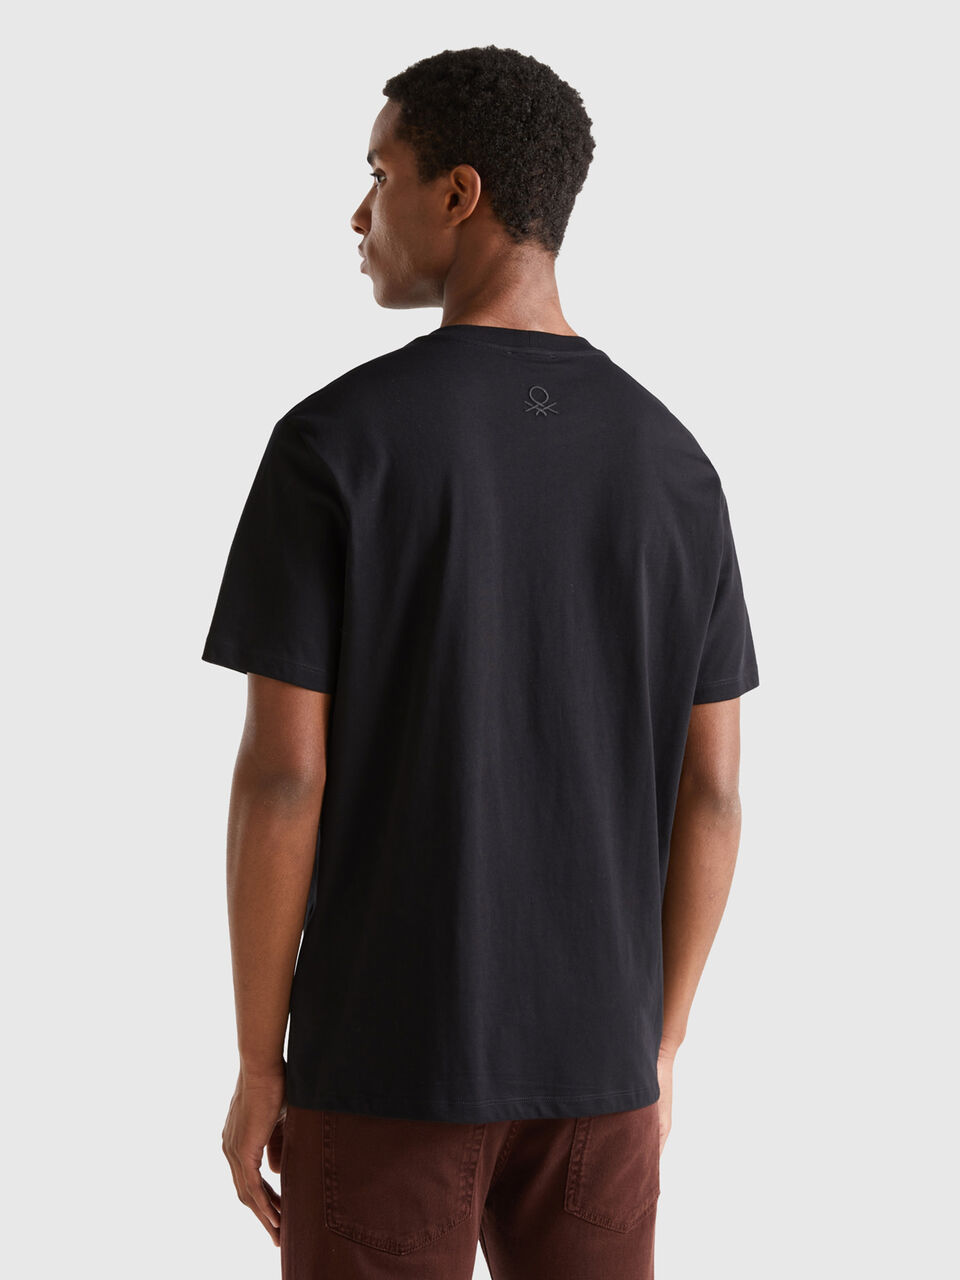 T-shirt in pure organic cotton - Benetton Black 